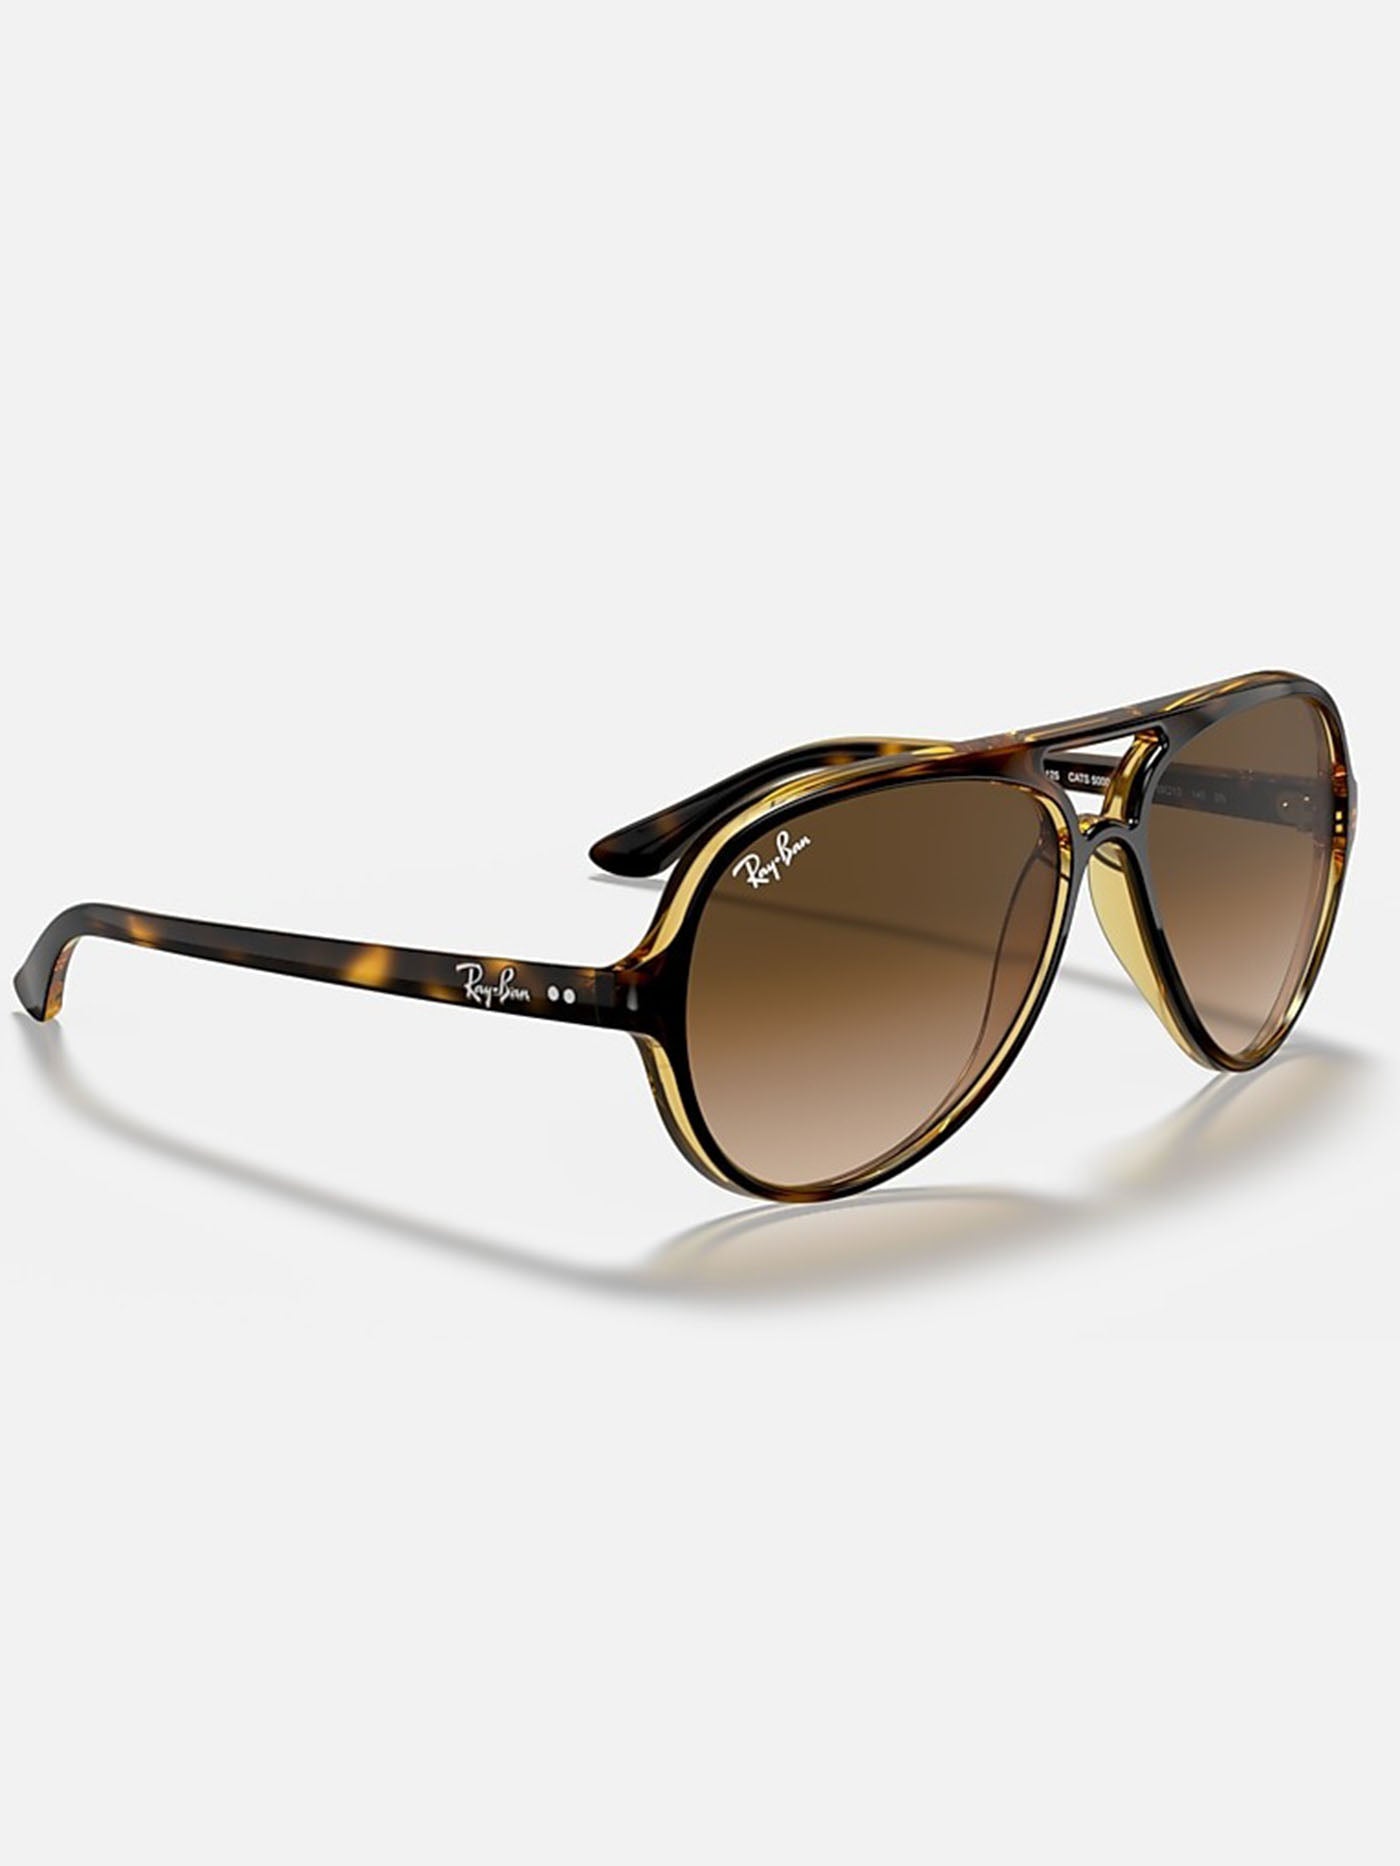 Ray Ban 2024 Cats 5000 Light Havana/Brown Gradient Sunglasses